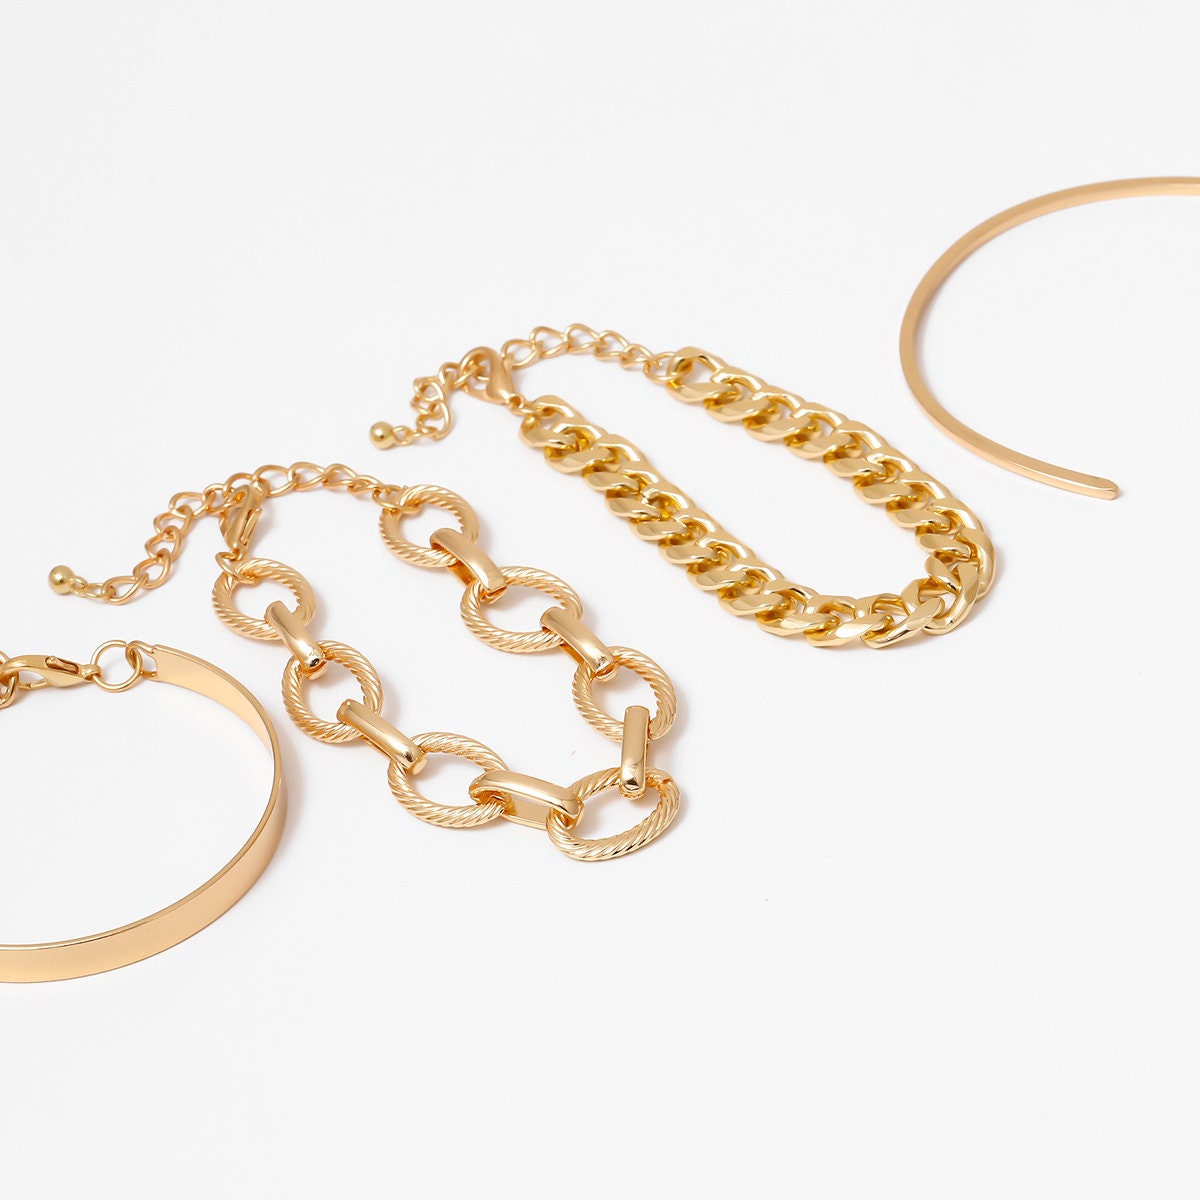 Boho Gold Silver Tone Curb Link Chain Bangle Bracelet Set - Etsy UK